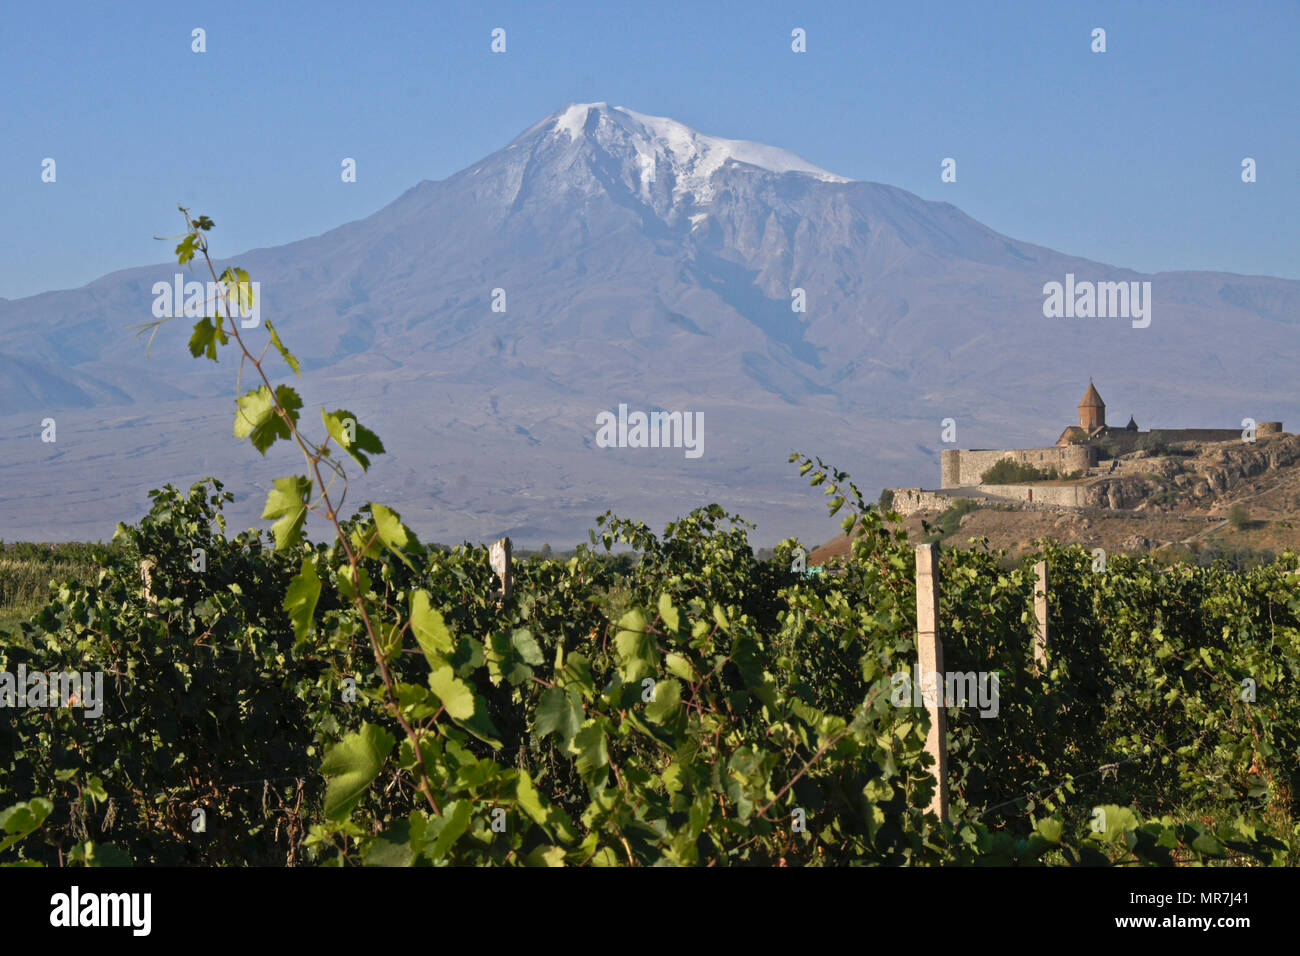 Khor Virap Monastery with Mount Ararat and vineyards, Armenia Stock Photo